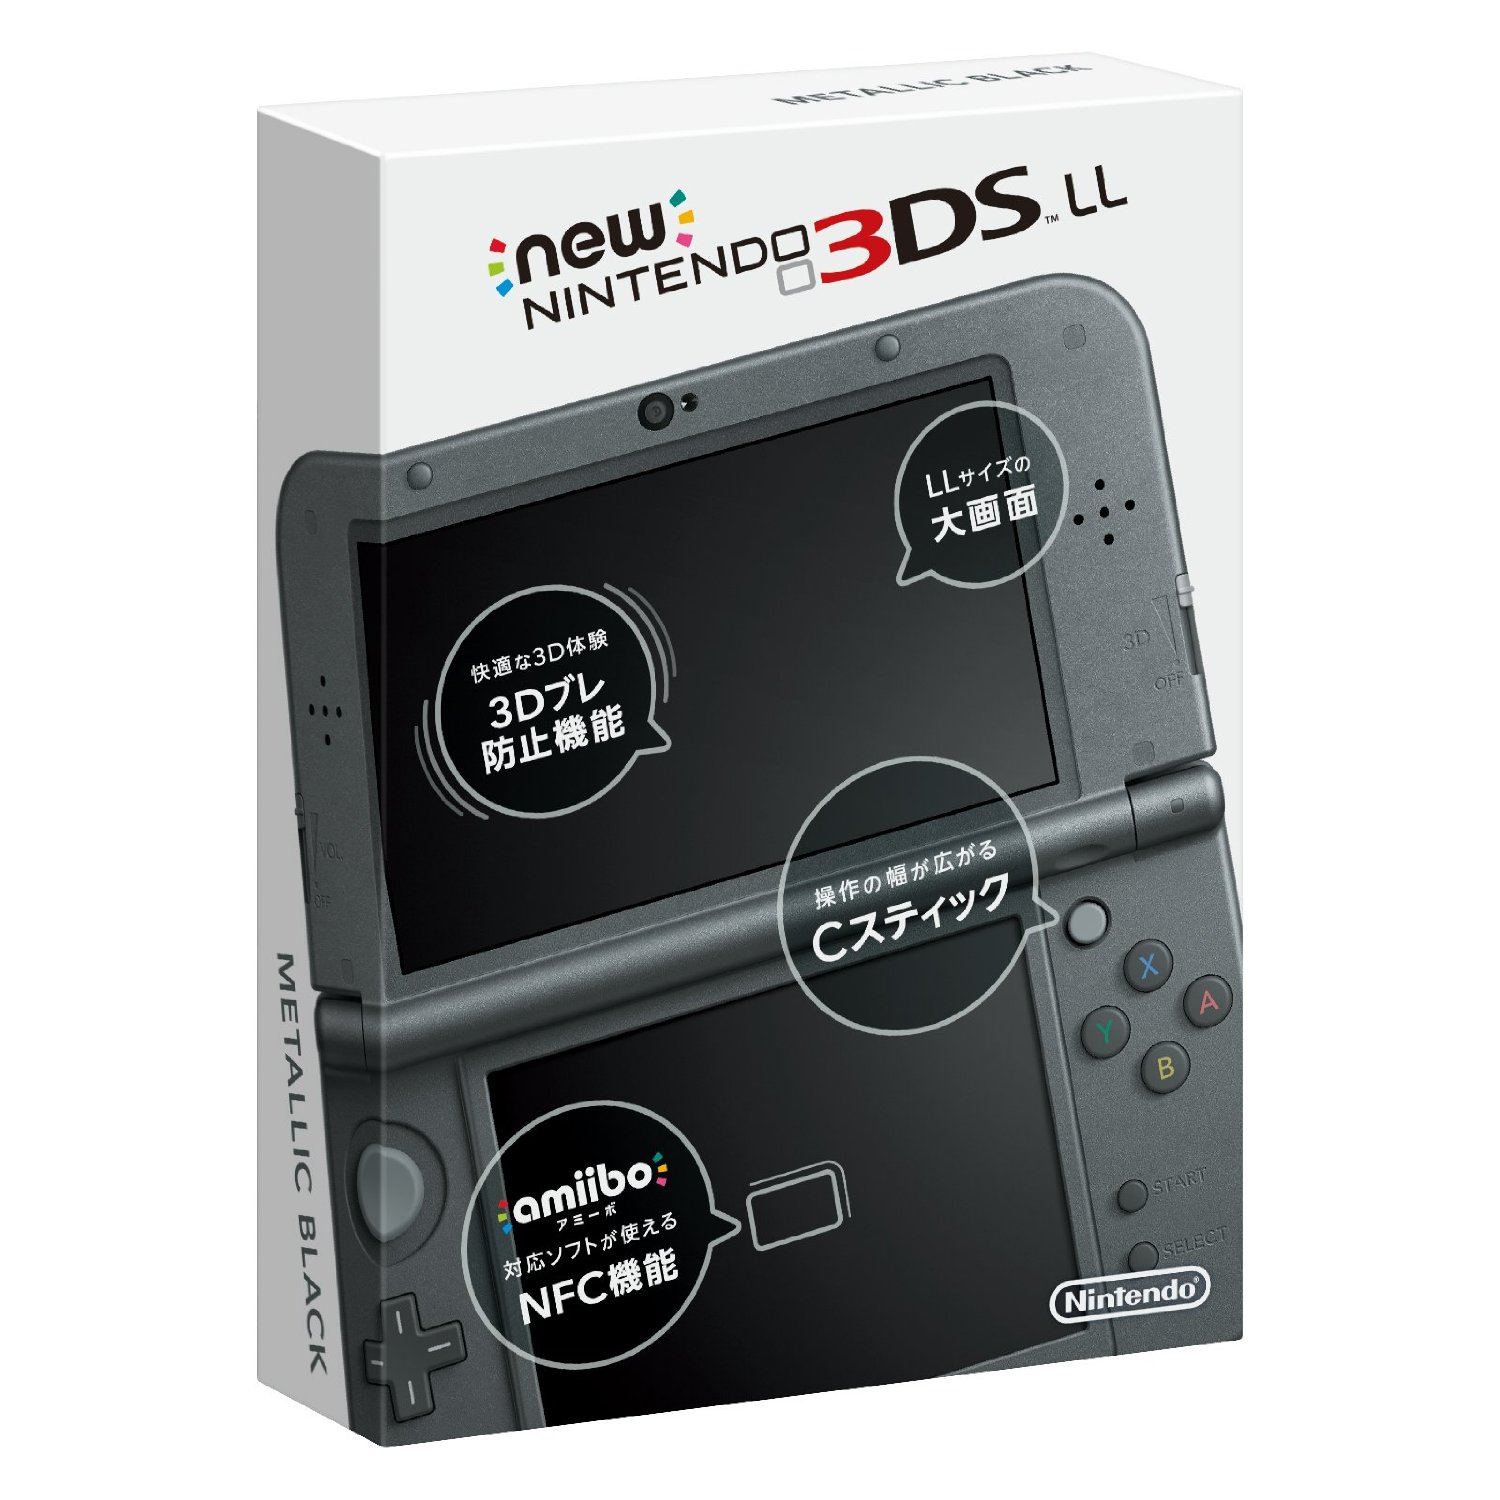 New Nintendo 3ds Ll Metallic Black